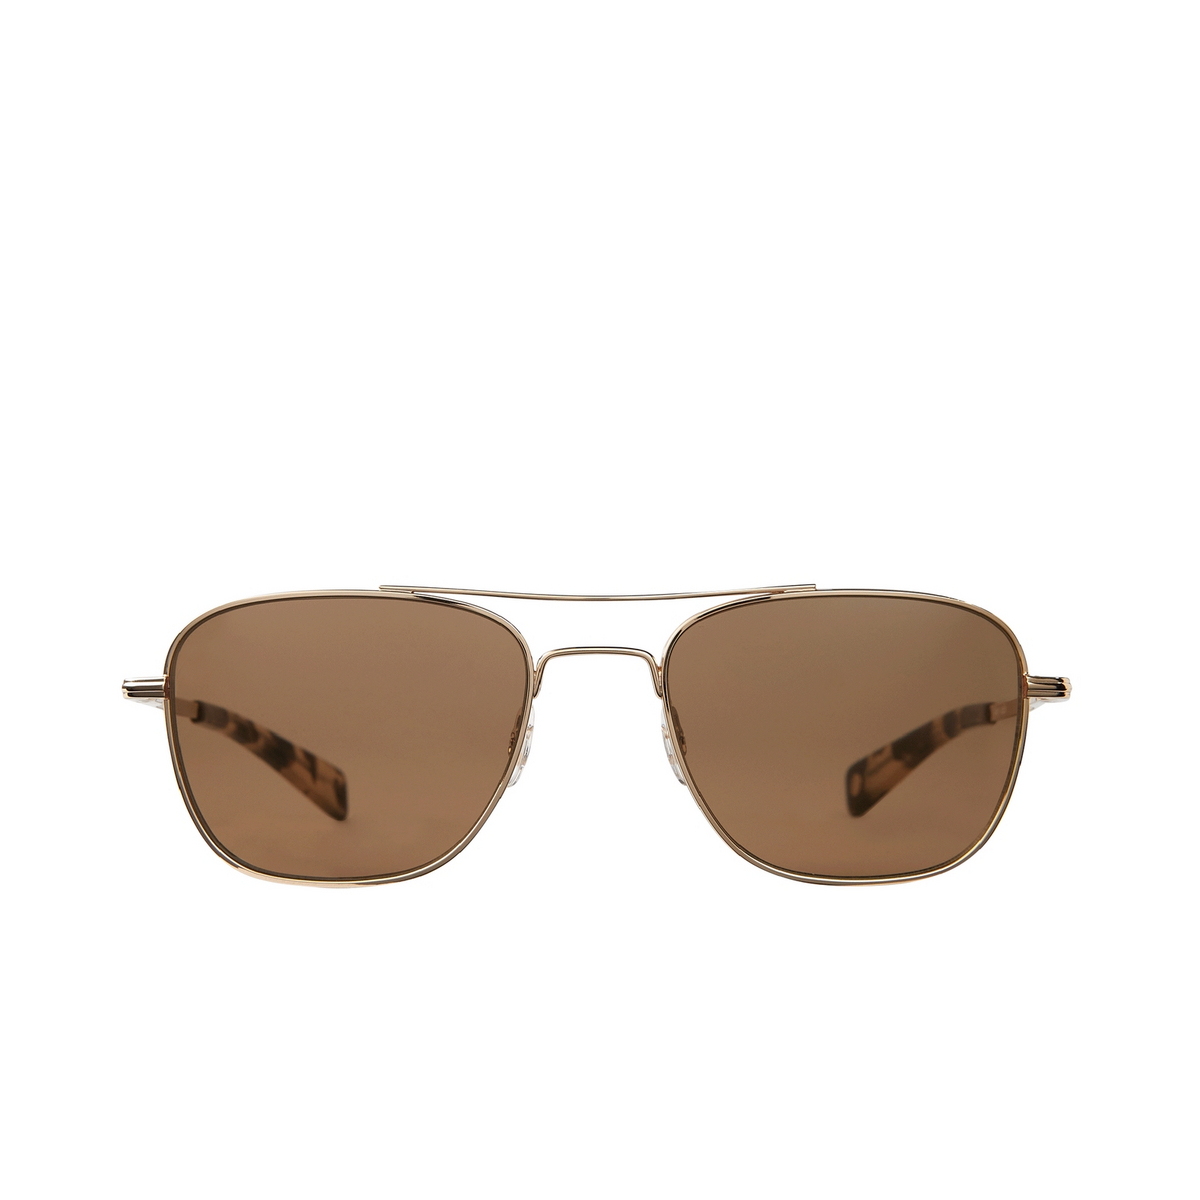 Garrett Leight® Aviator Sunglasses: Harbor Sun color G-yt/brnsuv Gold-yellow Tortoise/brown Suv - front view